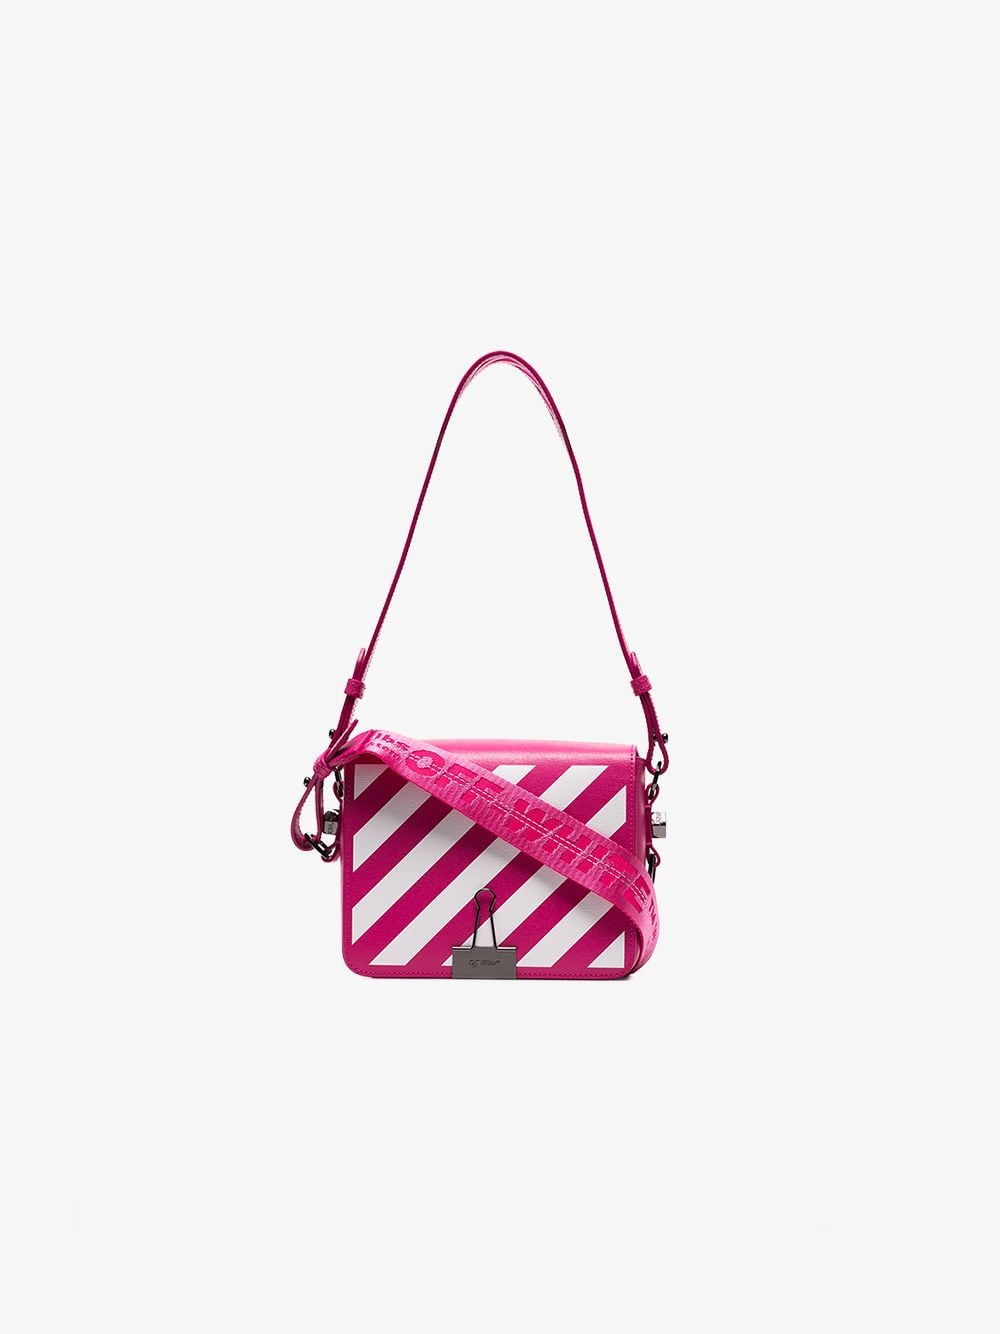 The Off-White Pink & White Diagonal Stripe Bag Is Bound To Turn